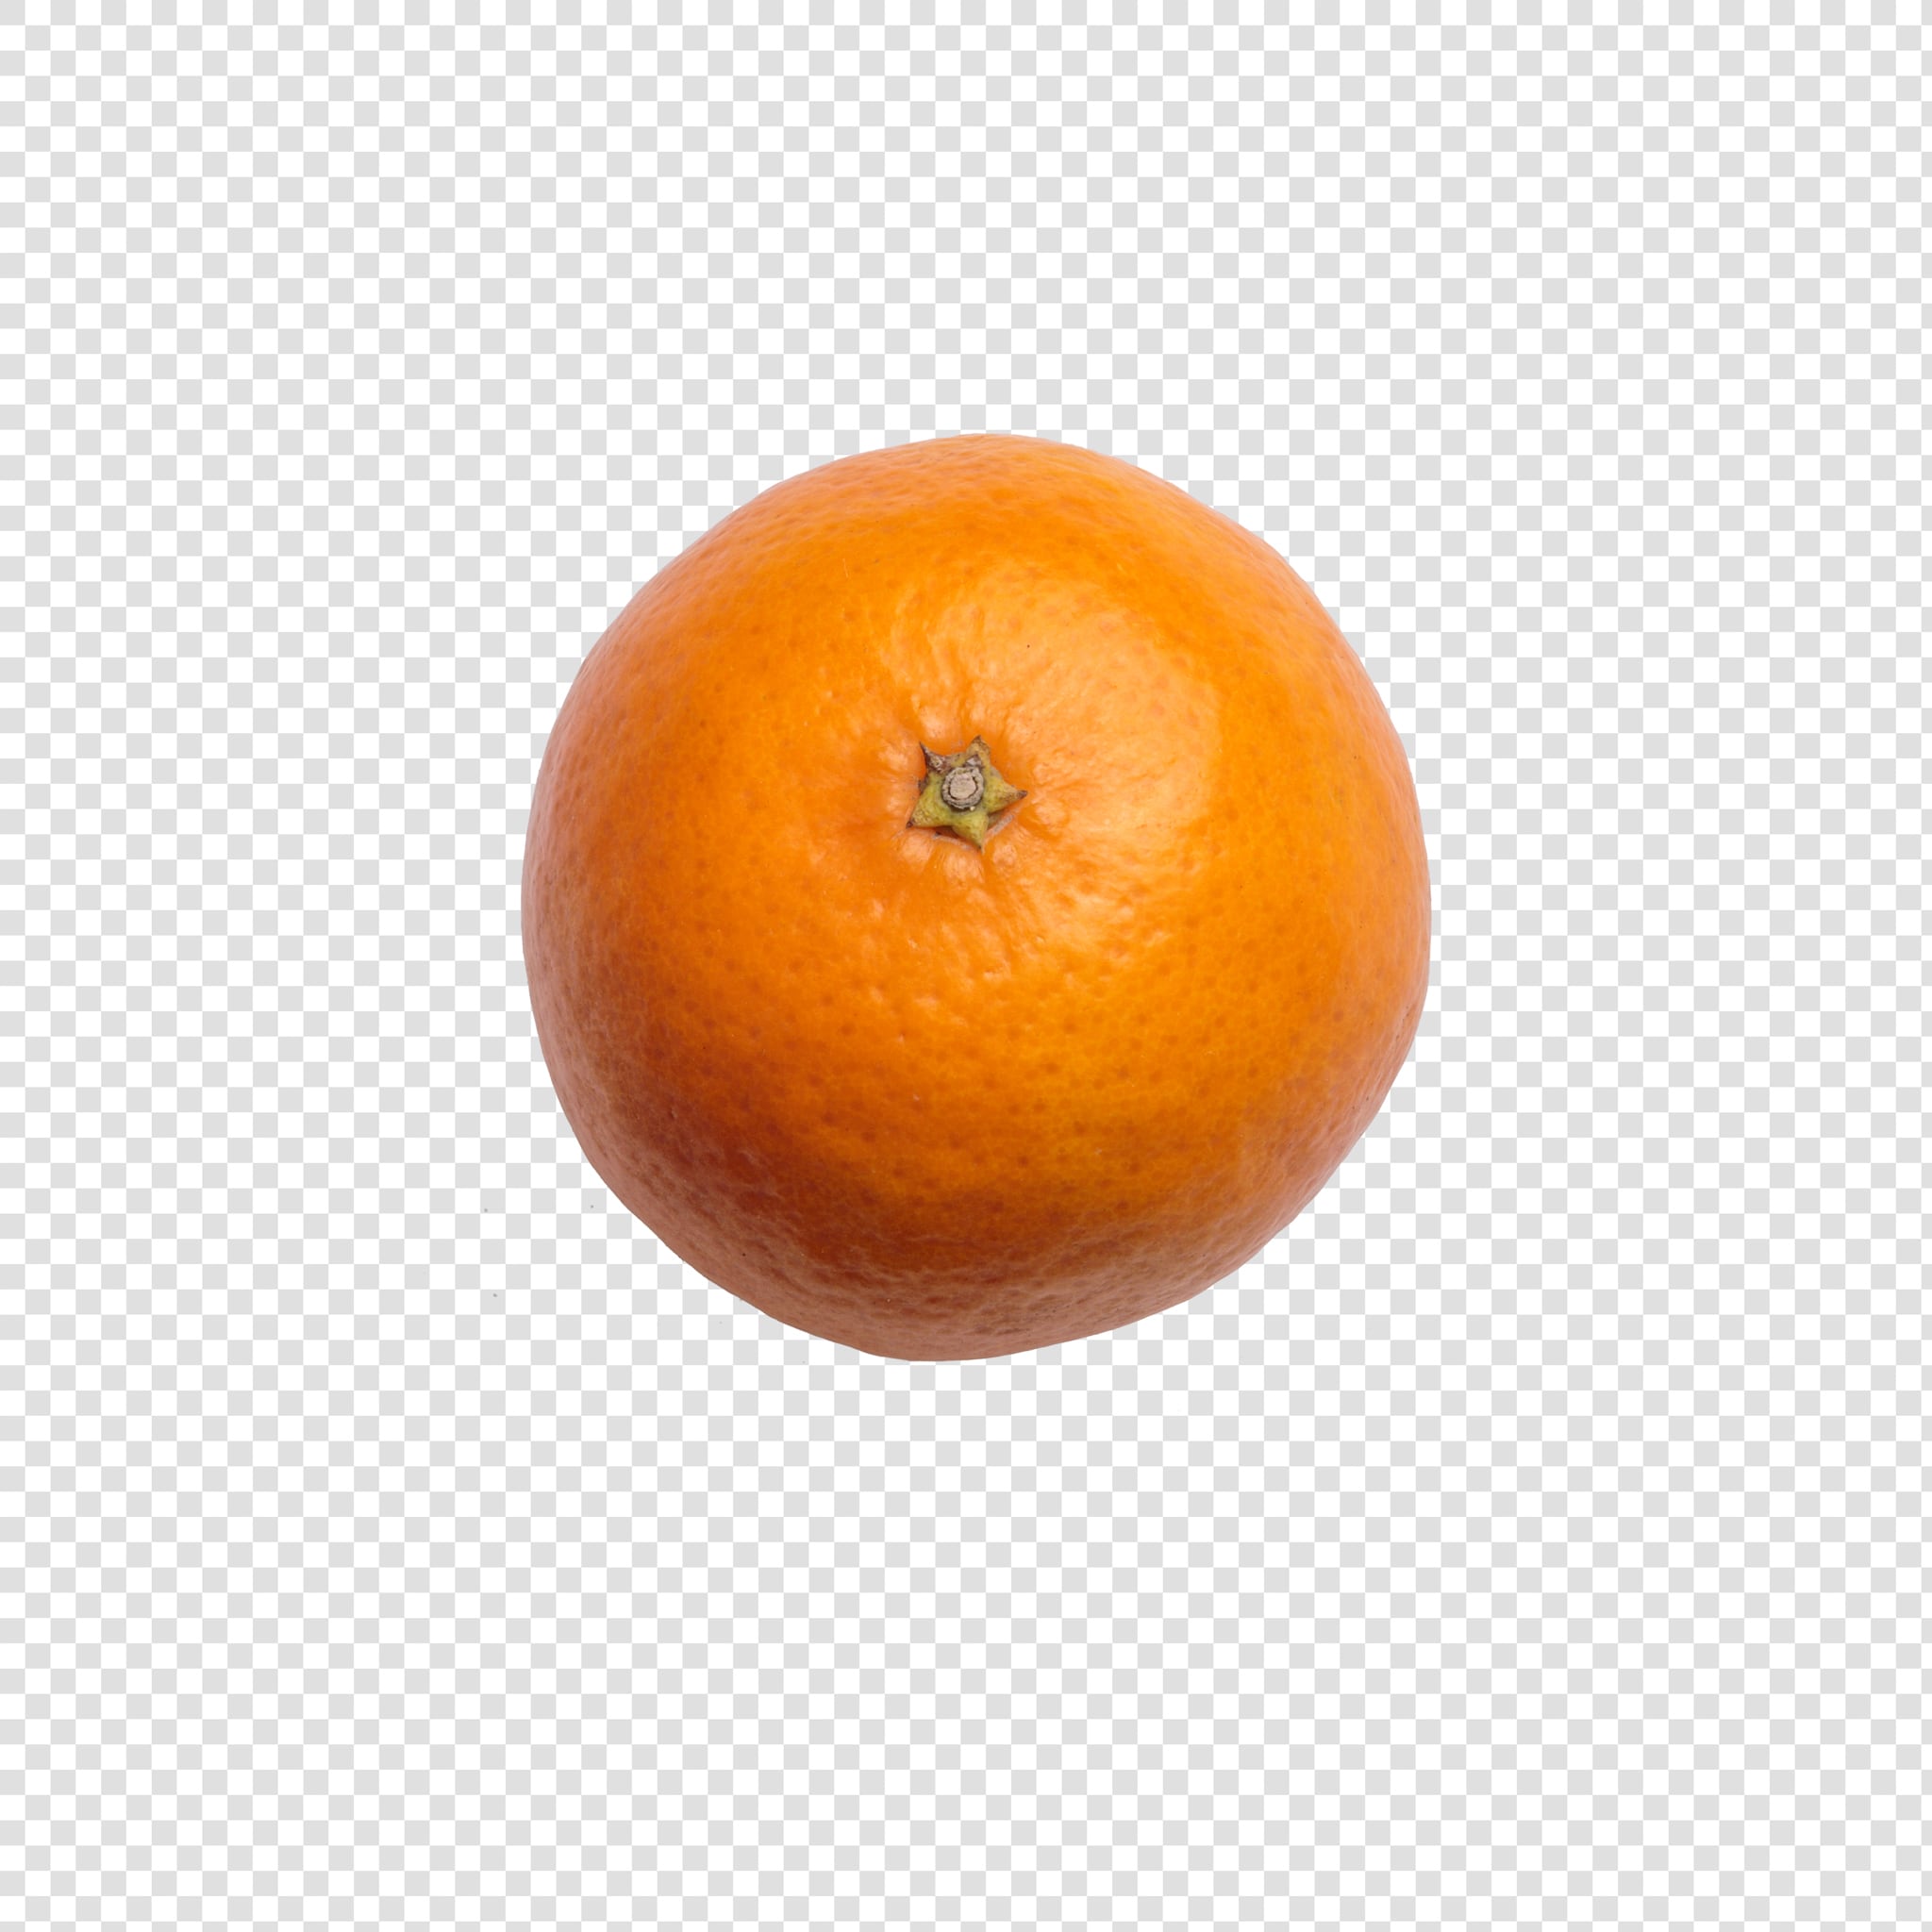 Orange PSD layered image